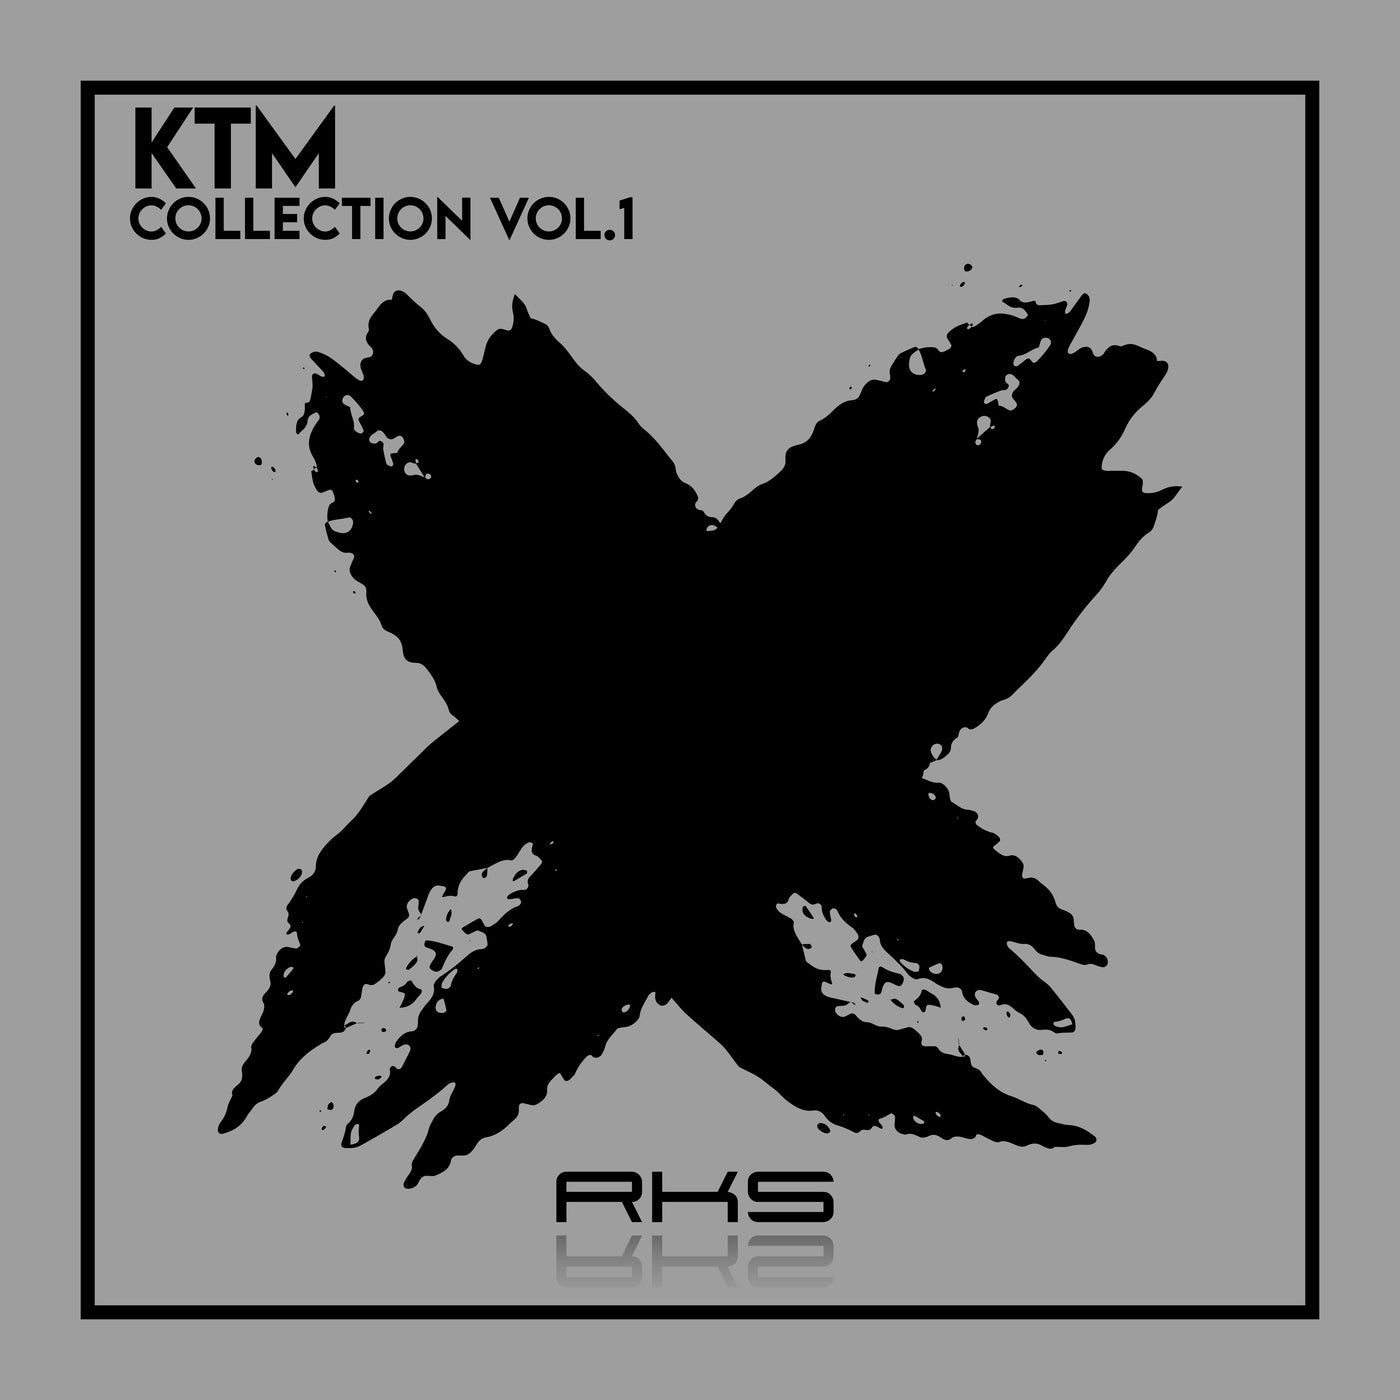 KTM Collection Vol. 1